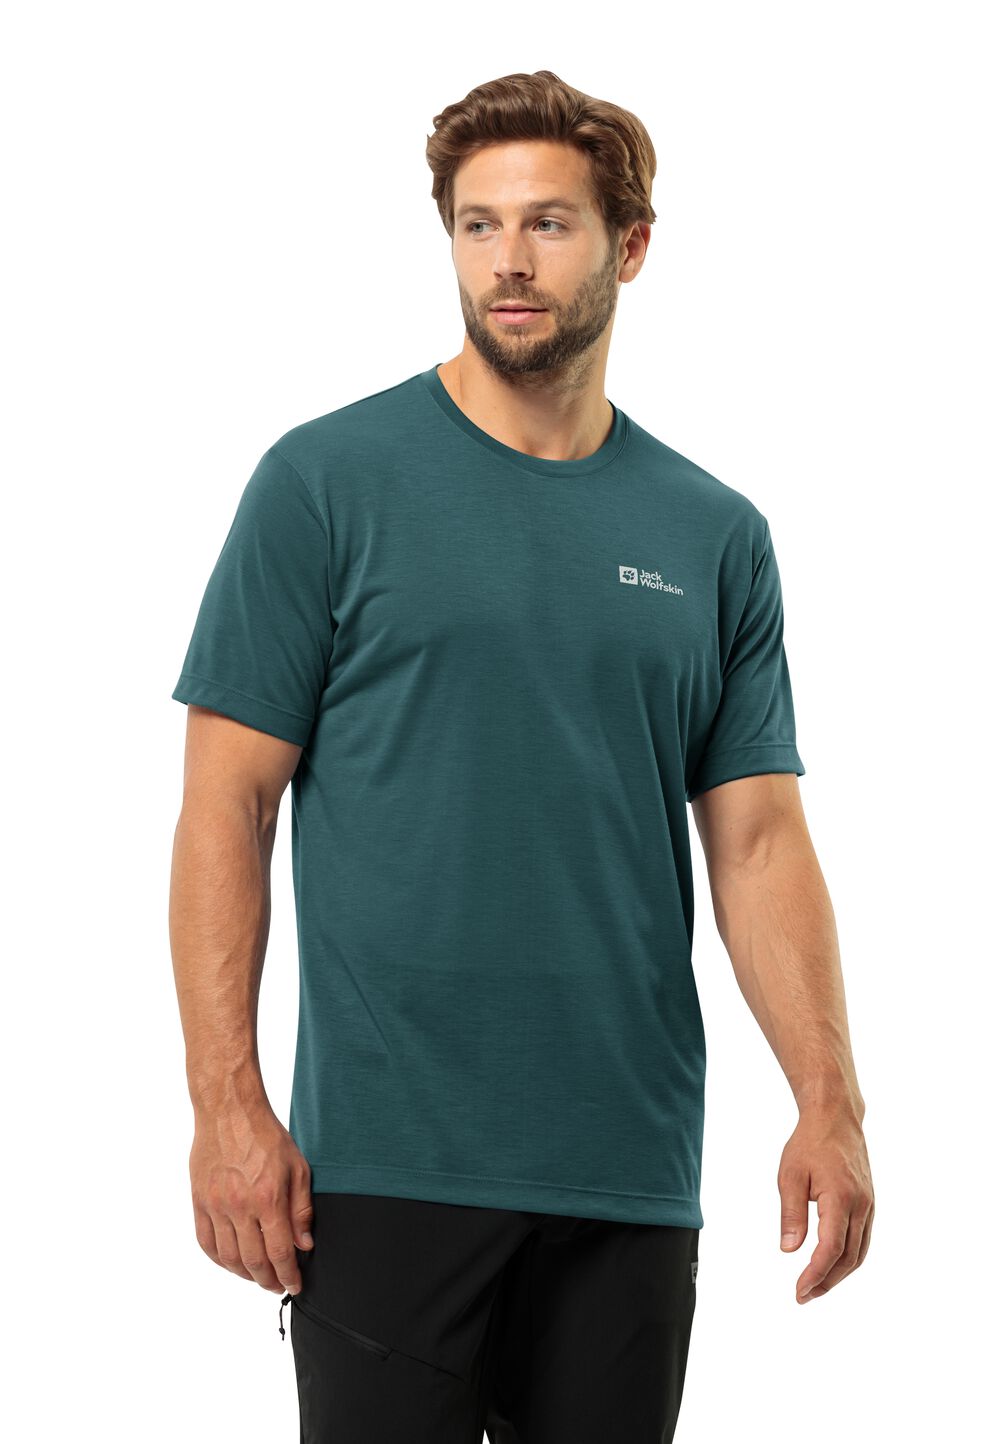 Jack Wolfskin Vonnan S S T-Shirt Men Functioneel shirt Heren S emerald